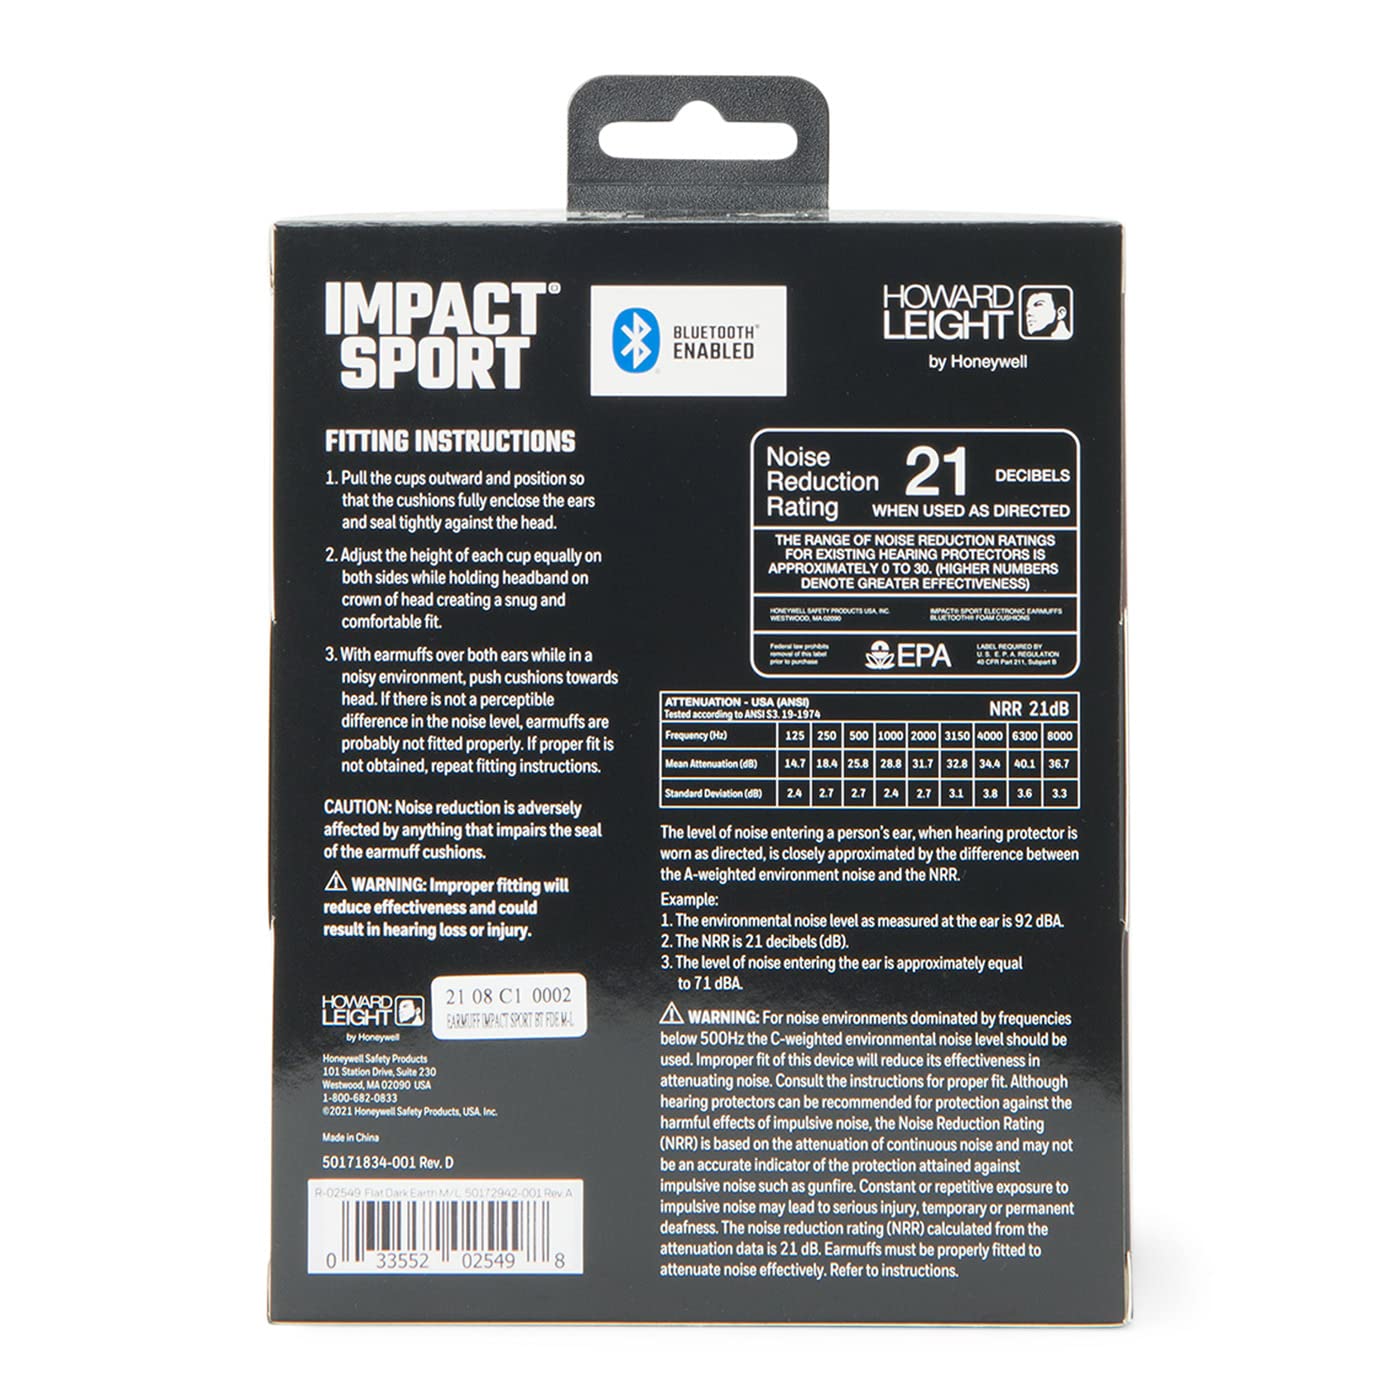 Howard Leight Impact Sport Bluetooth